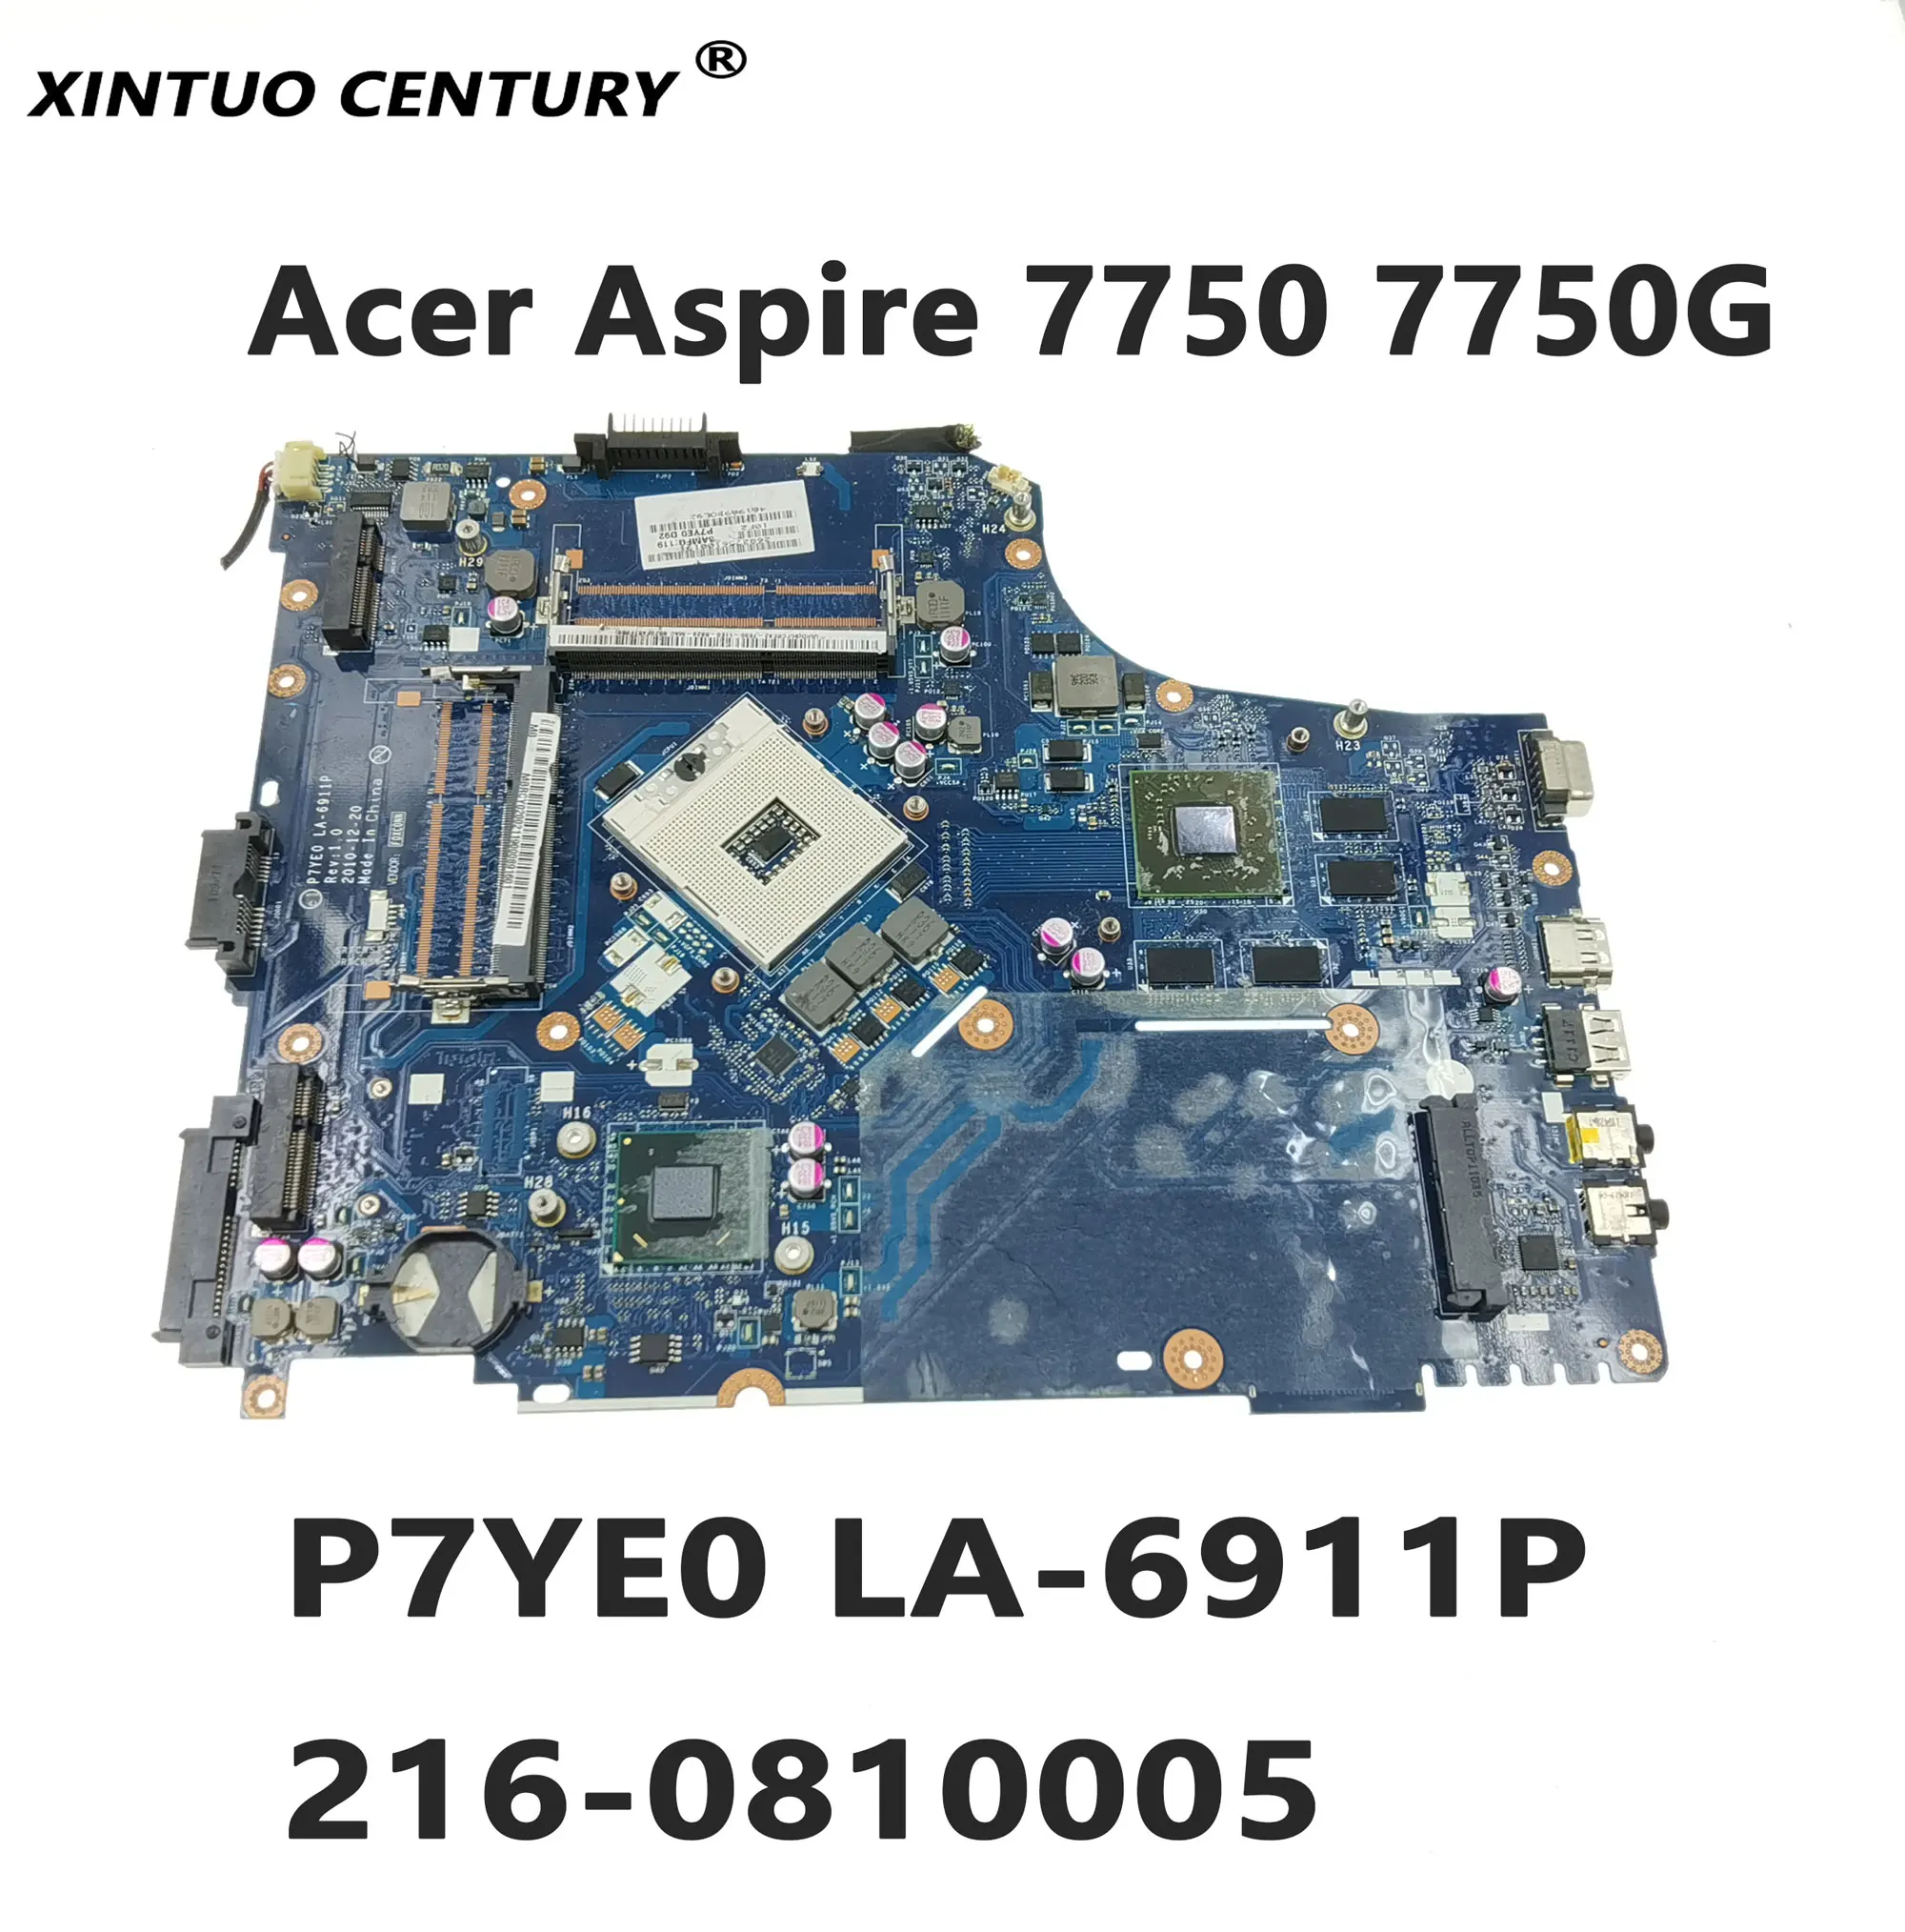 

Материнская плата MBRMK02001 MB.RMK02.001 для ноутбука Acer ASPIRE 7750 7750G материнская плата P7YE0 LA-6911P с тестом 216-0810005 DDR3 100%